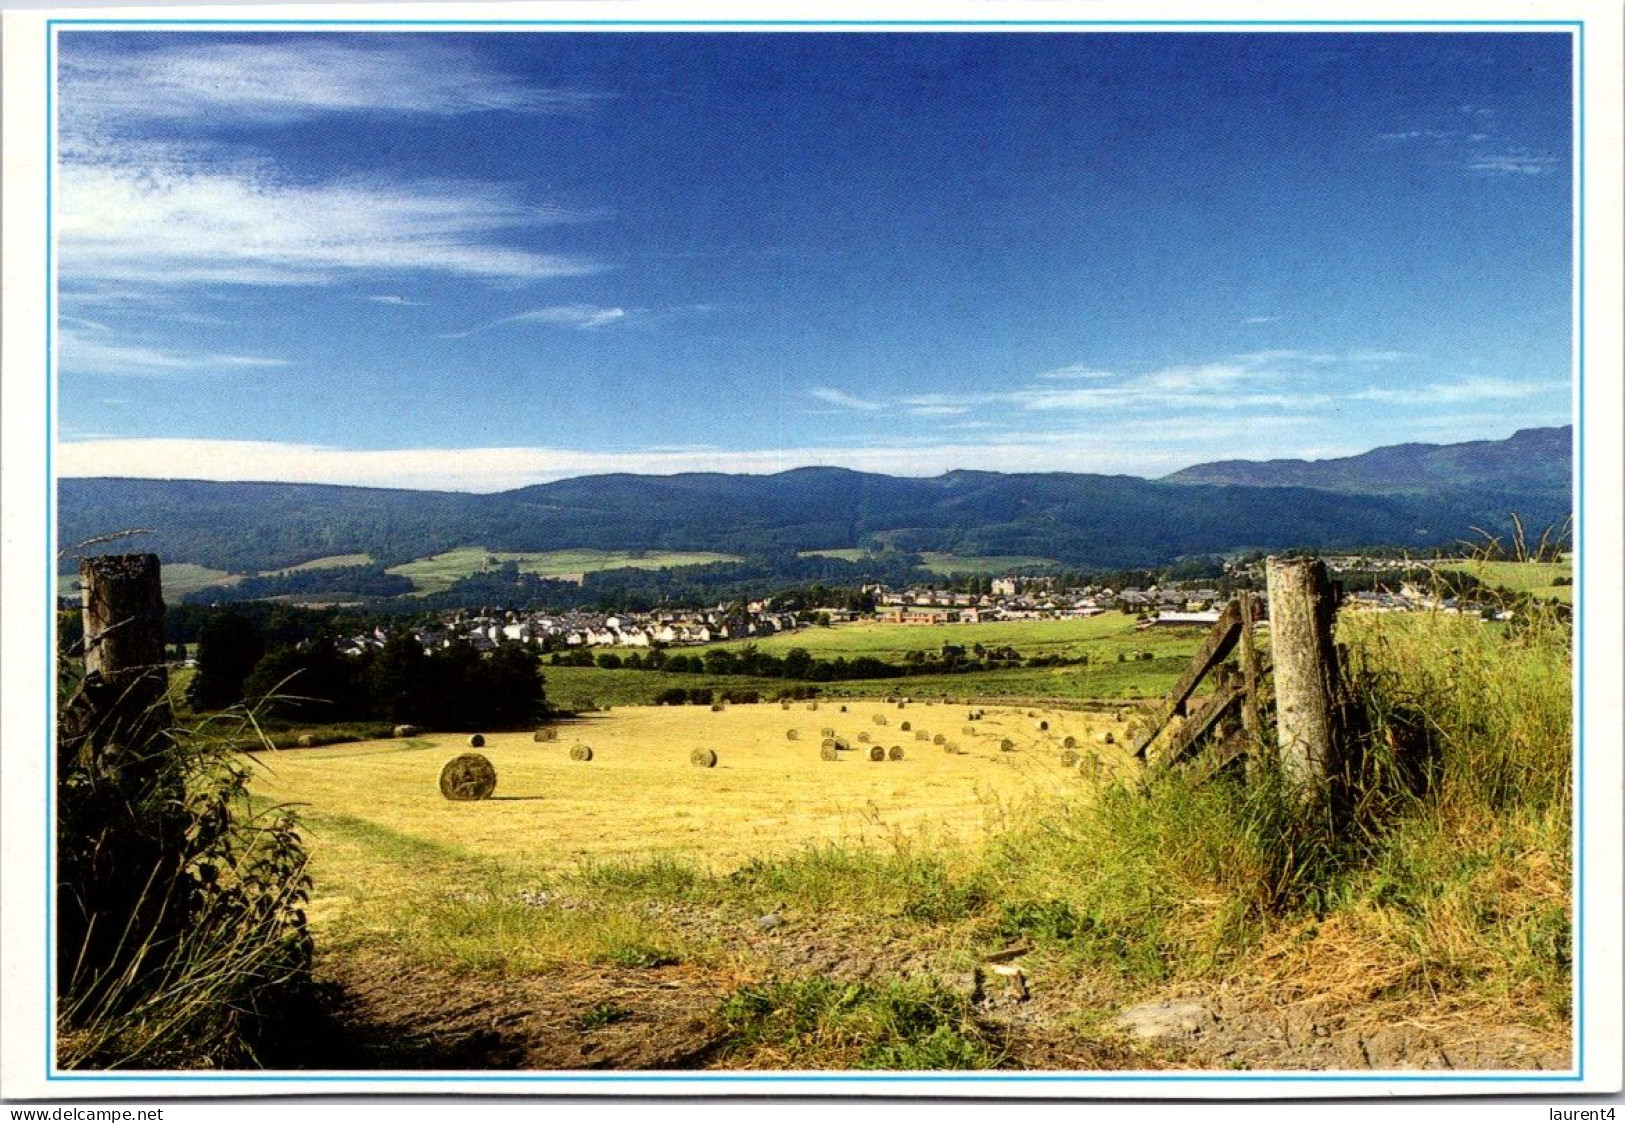 22-7-2023 (3 S 8) UK - Scotland - Dumfries & Pitlochry (2 Postcards) - Dumfriesshire